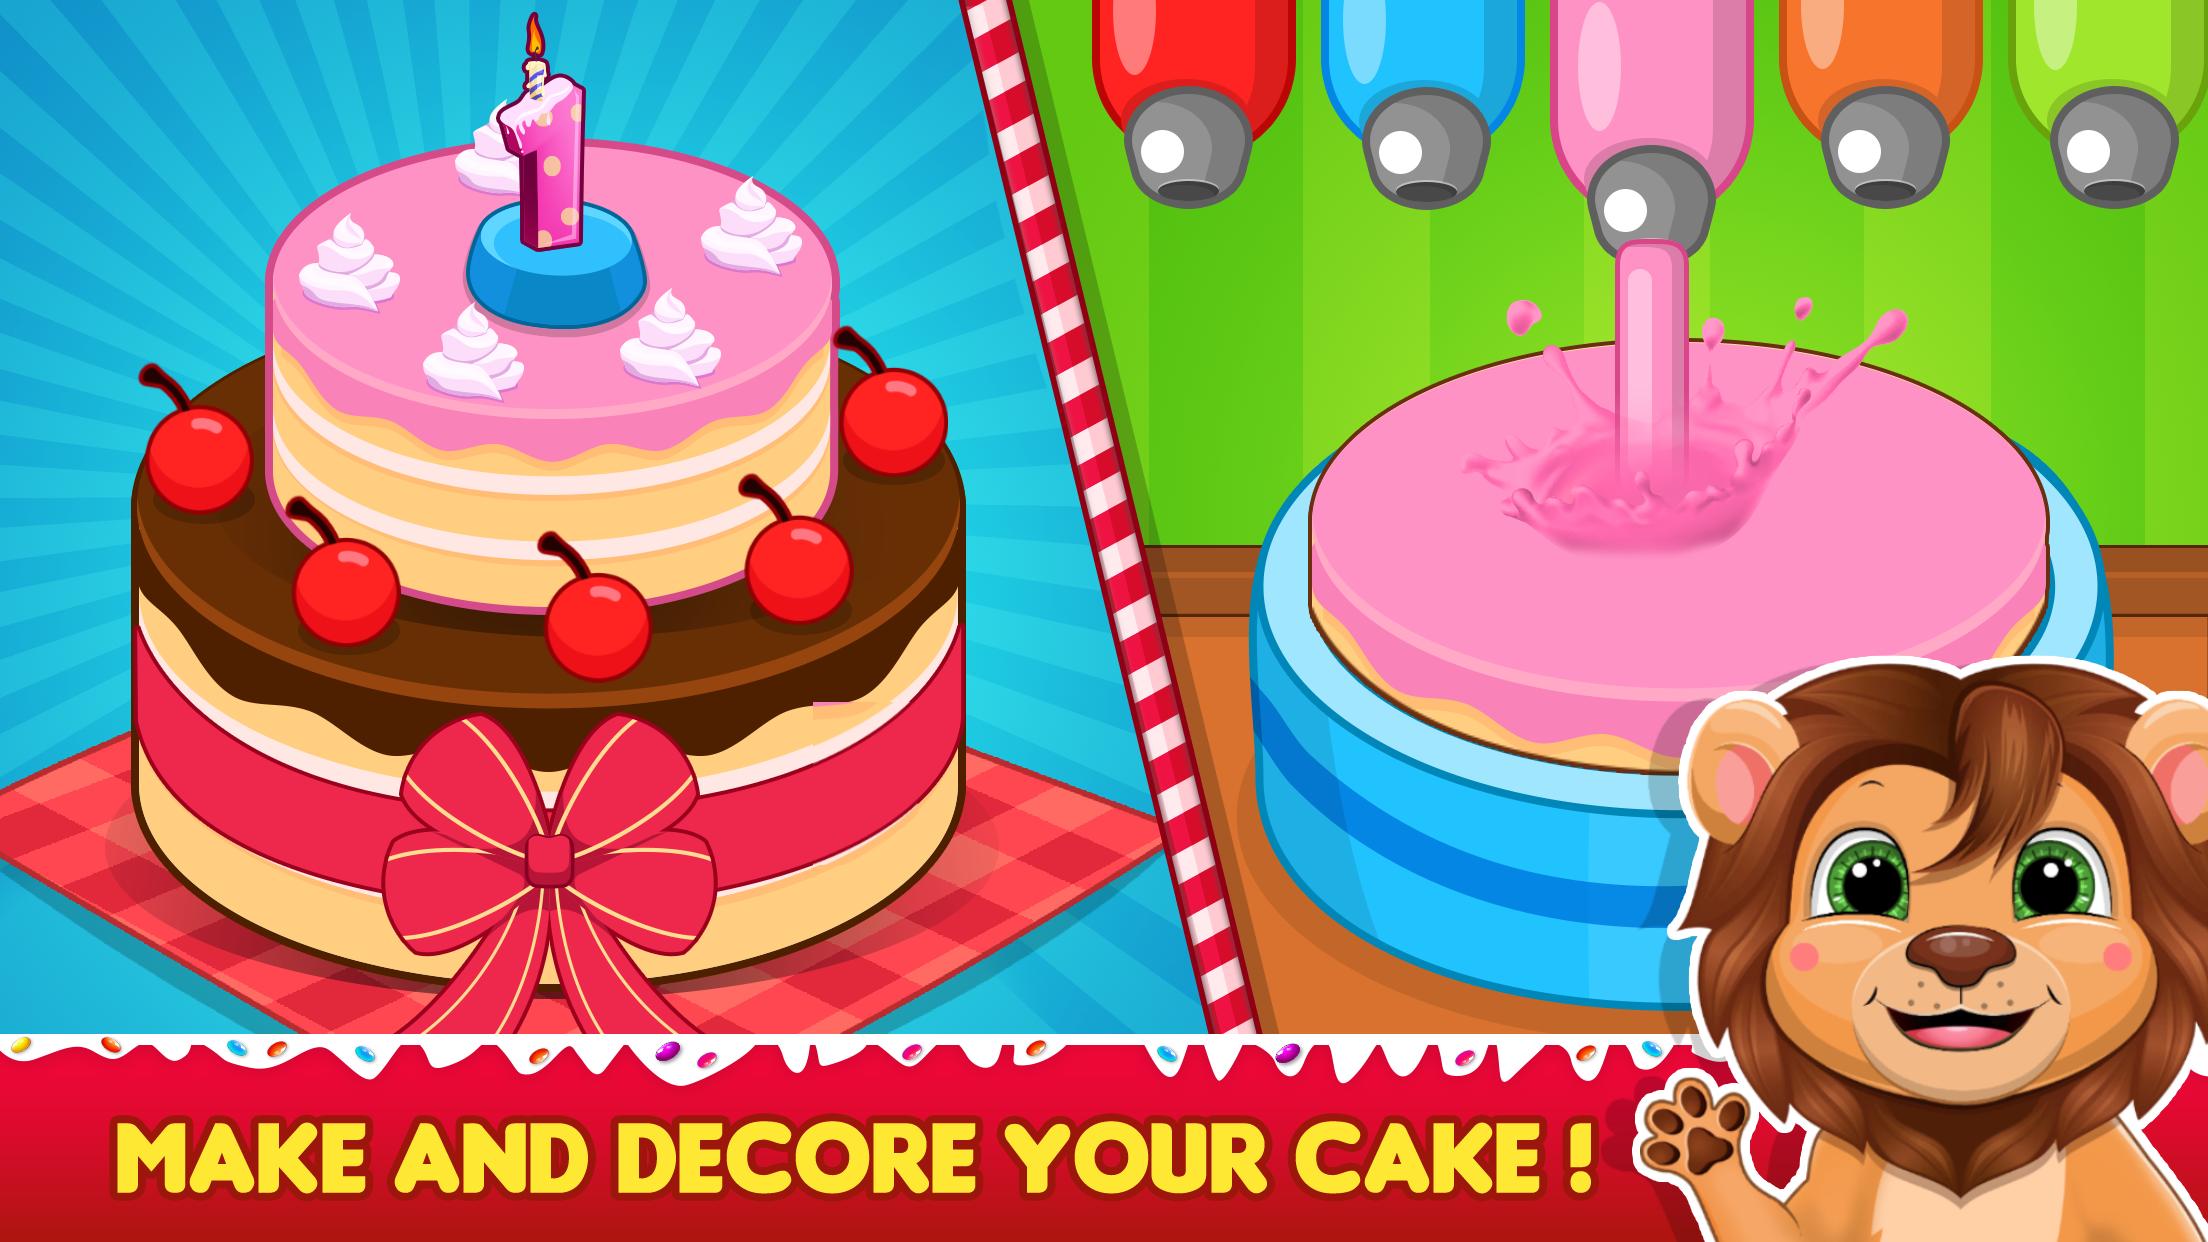 CAKE GAMES 🎂 - Play Online Games! | Poki